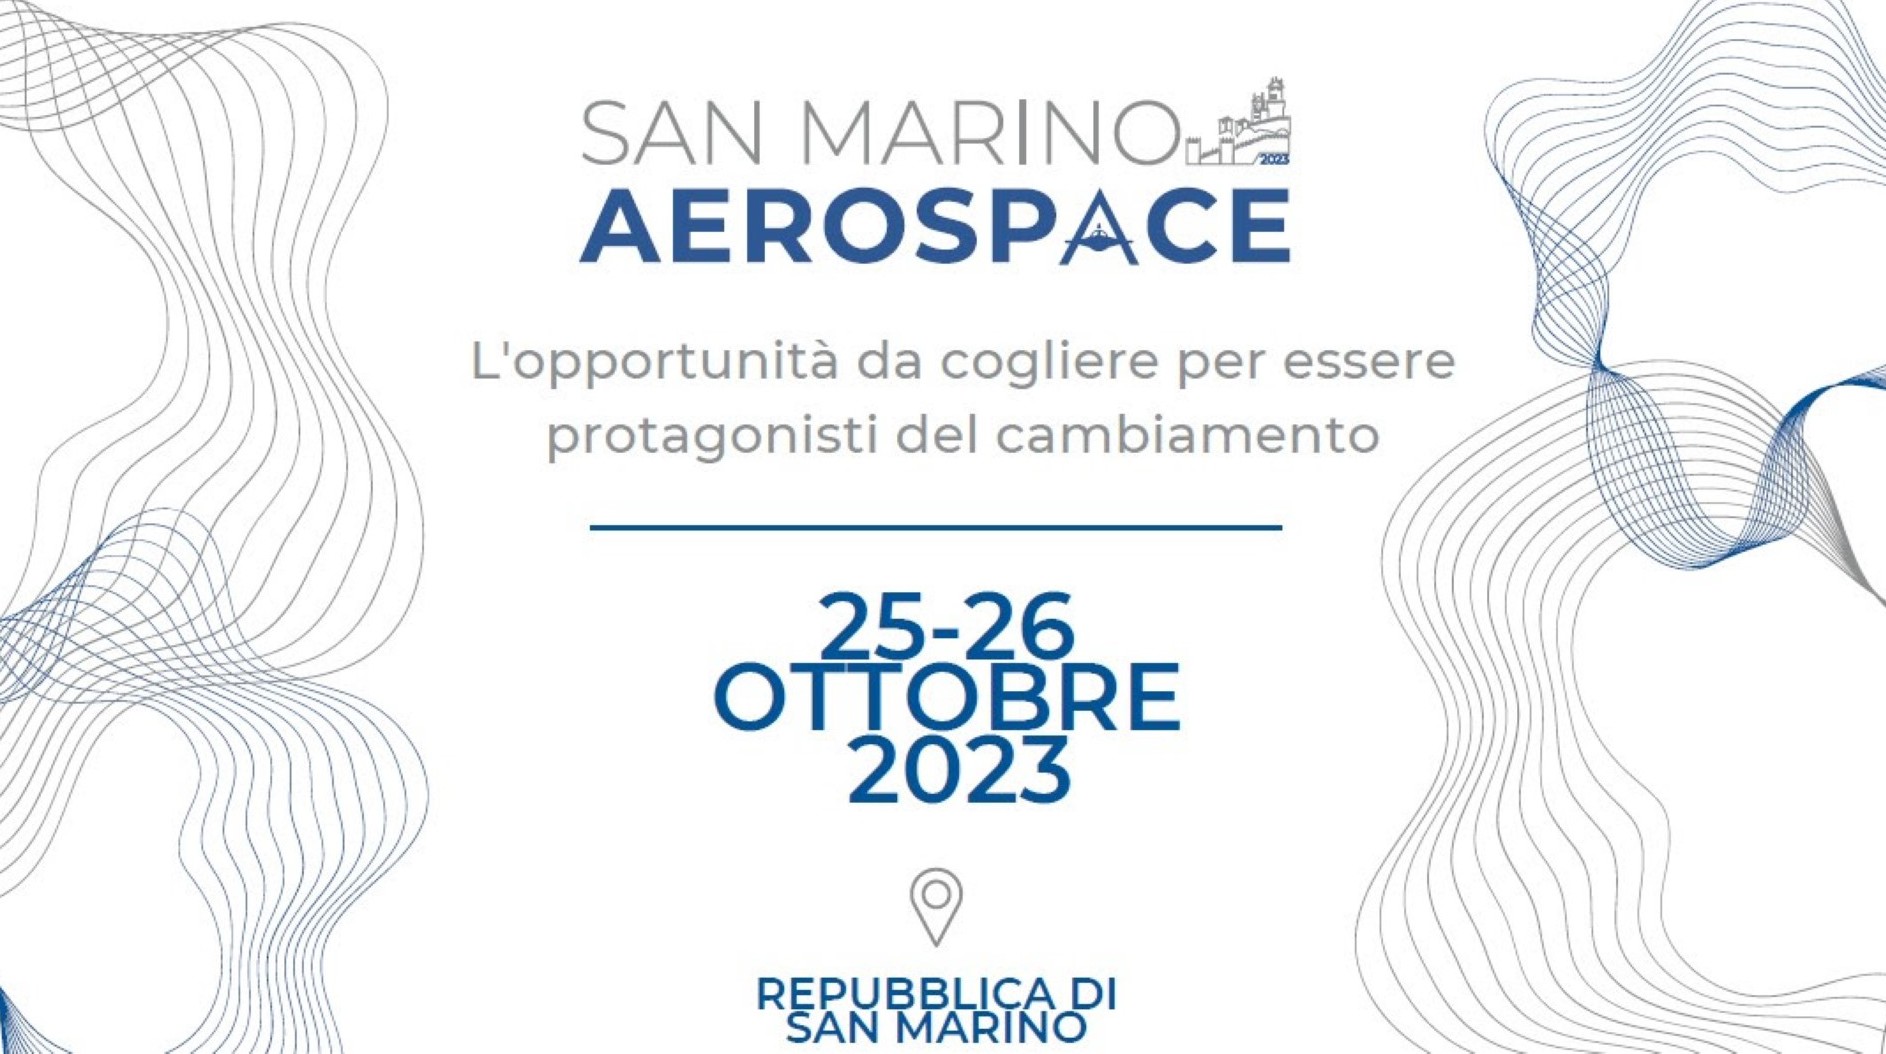 San Marino Aerospace